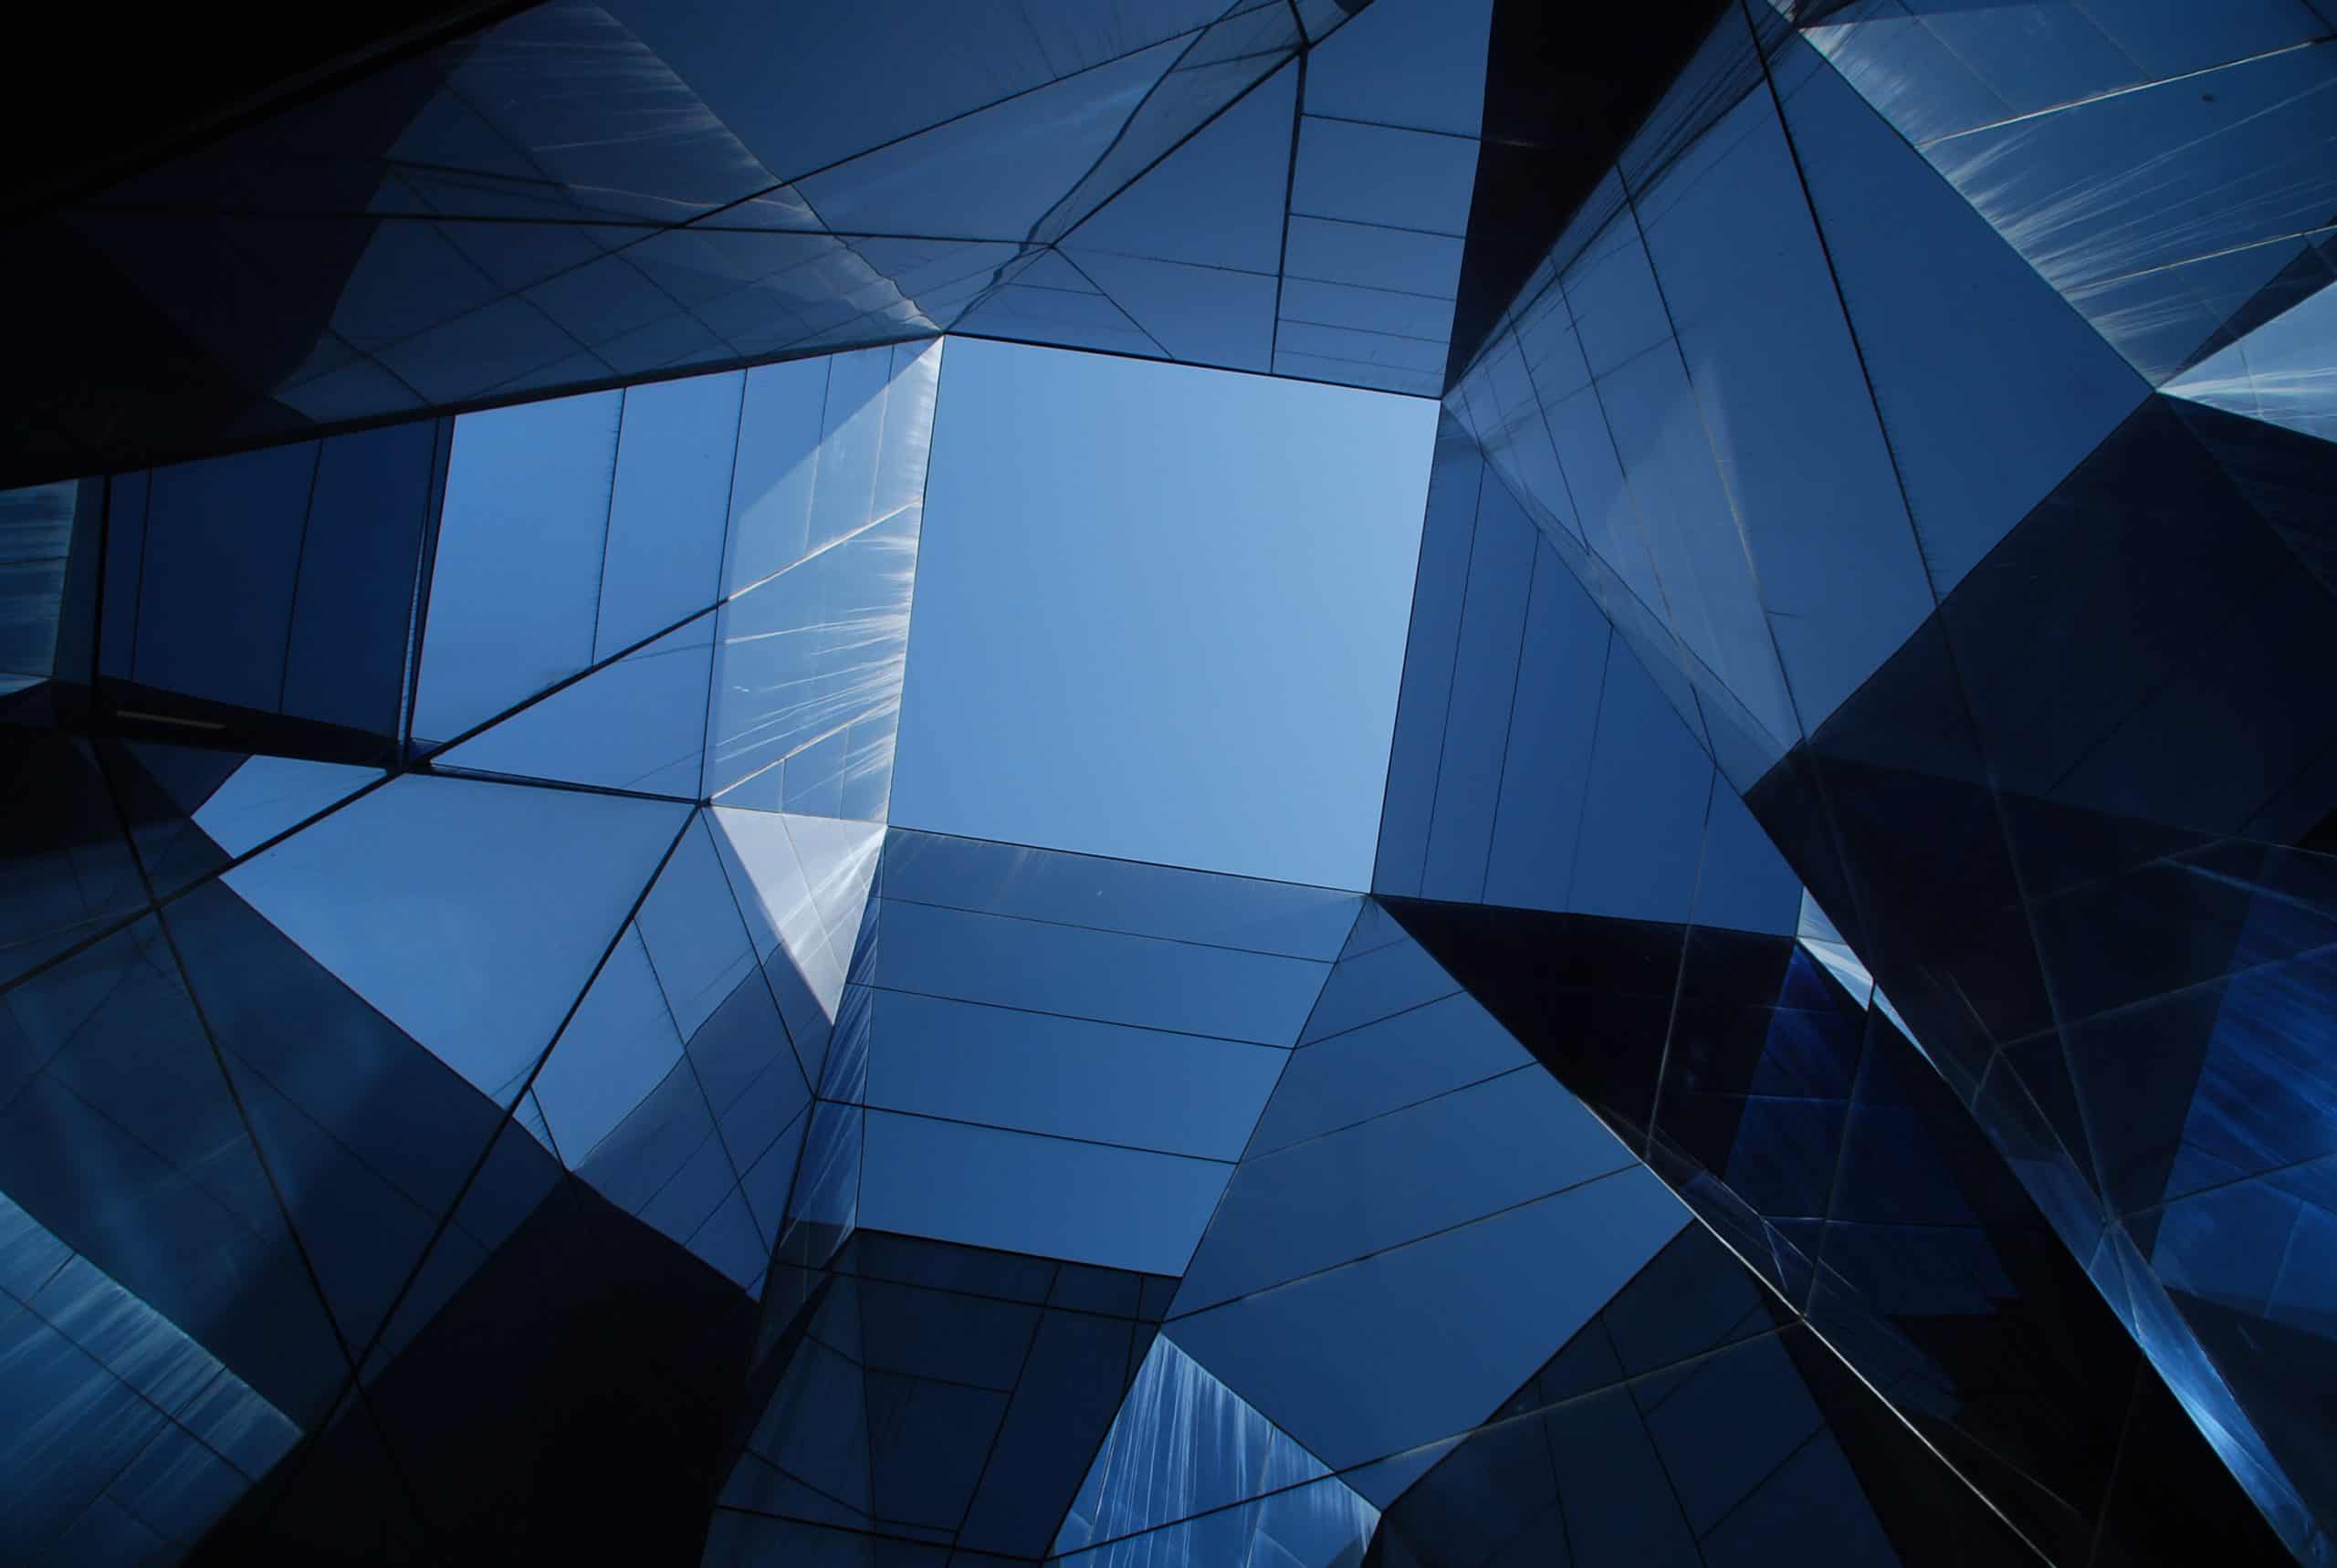 An abstract building skylight